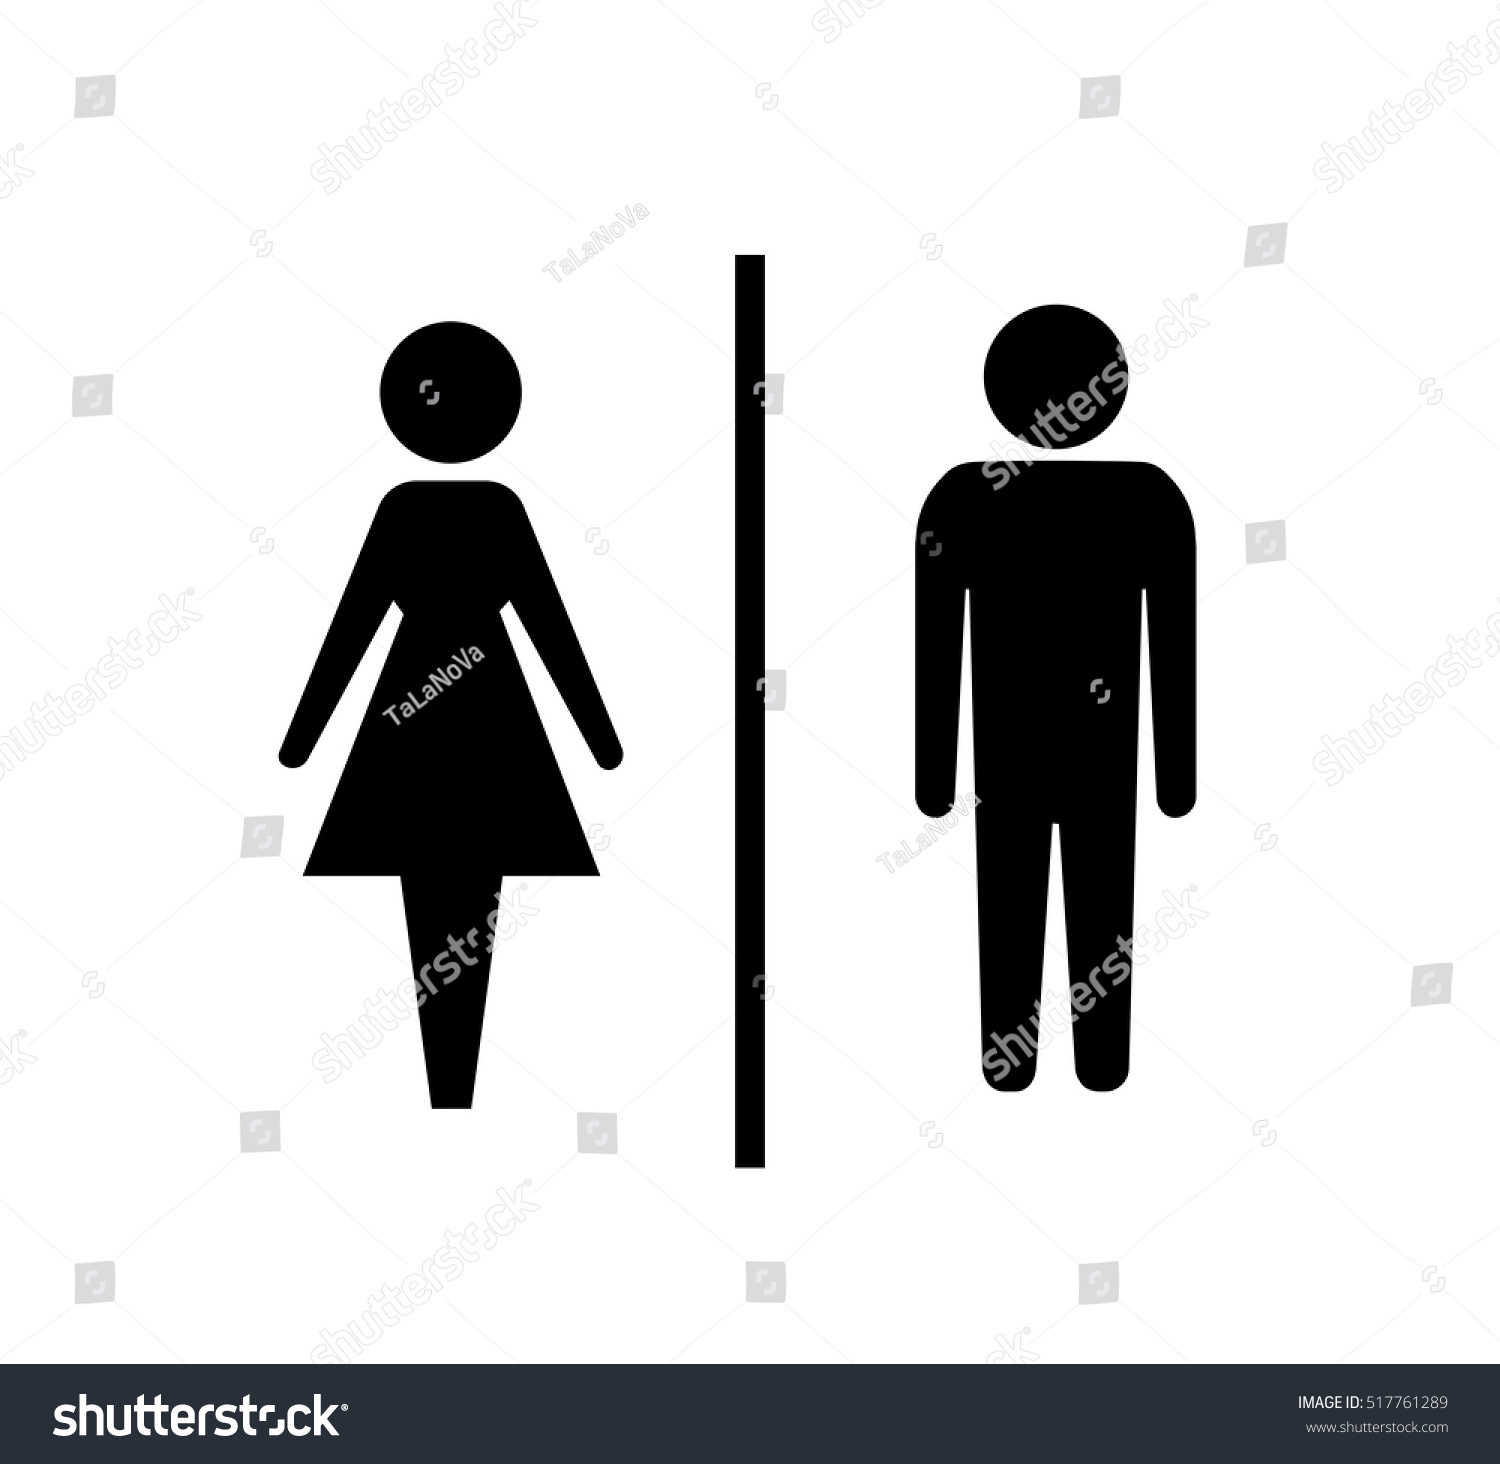 С другом мужа в туалете. Указатель туалет мужской и женский. Значок туалета. Значок туалет мужской и женский. Туалет силуэт.